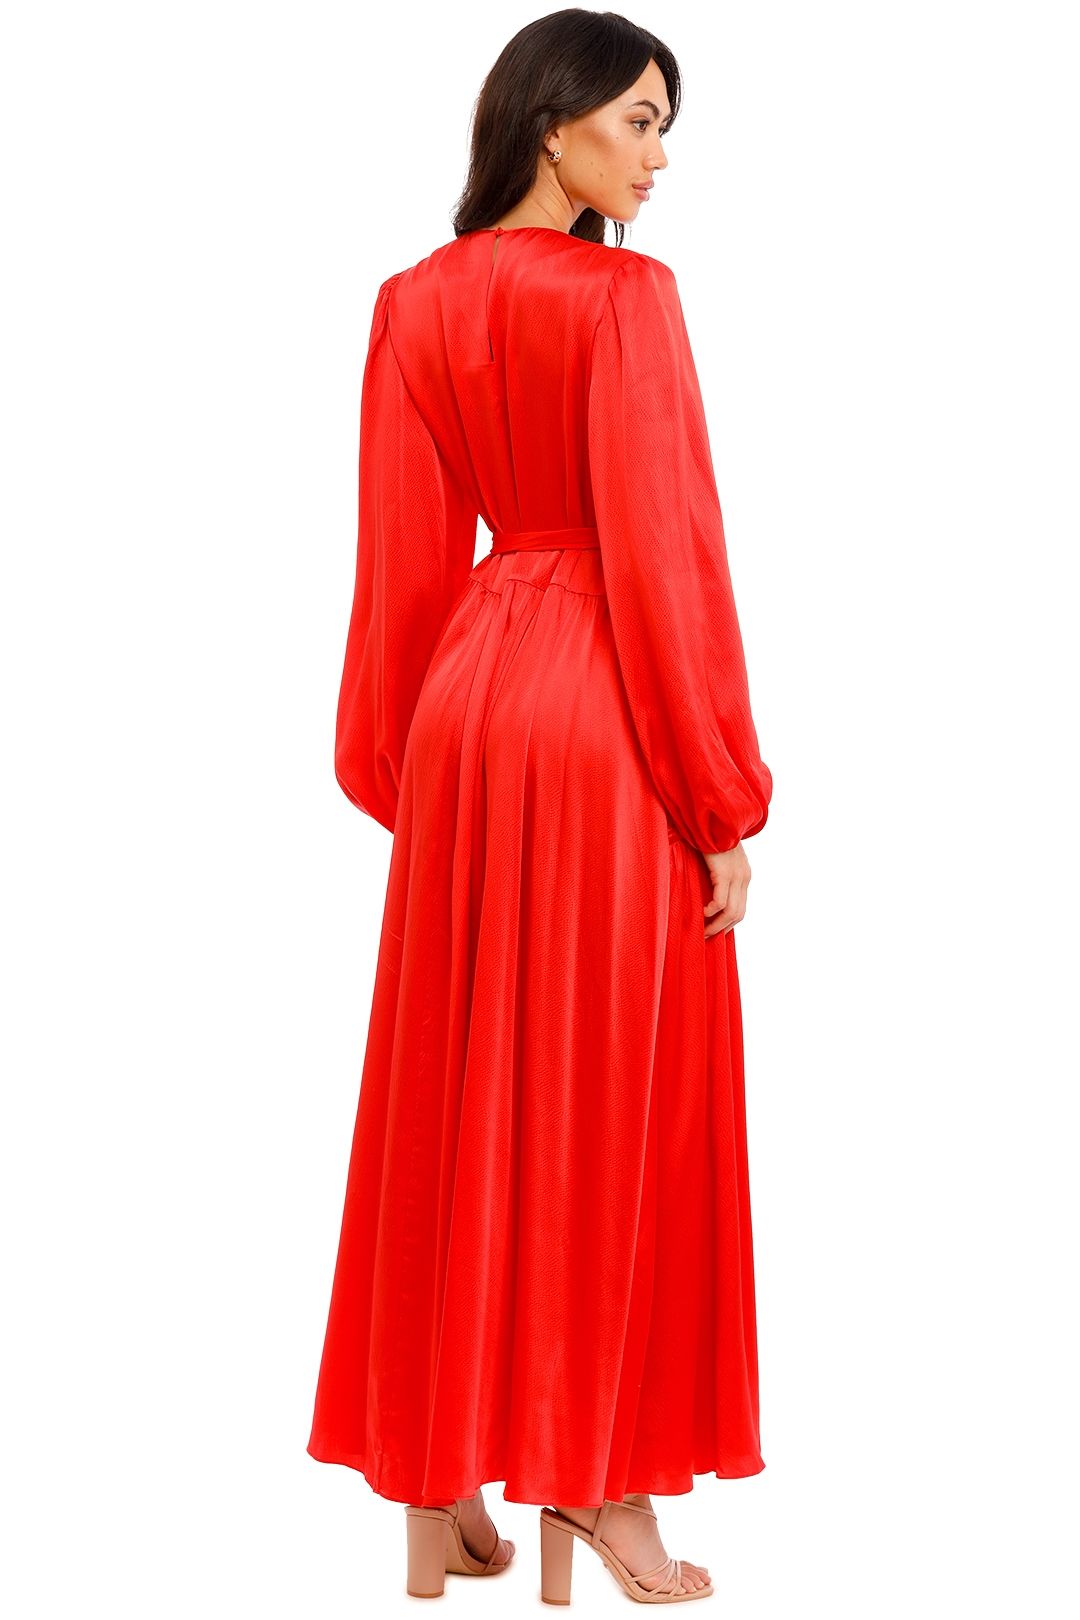 AJE Oxidised Maxi Dress in Red satin